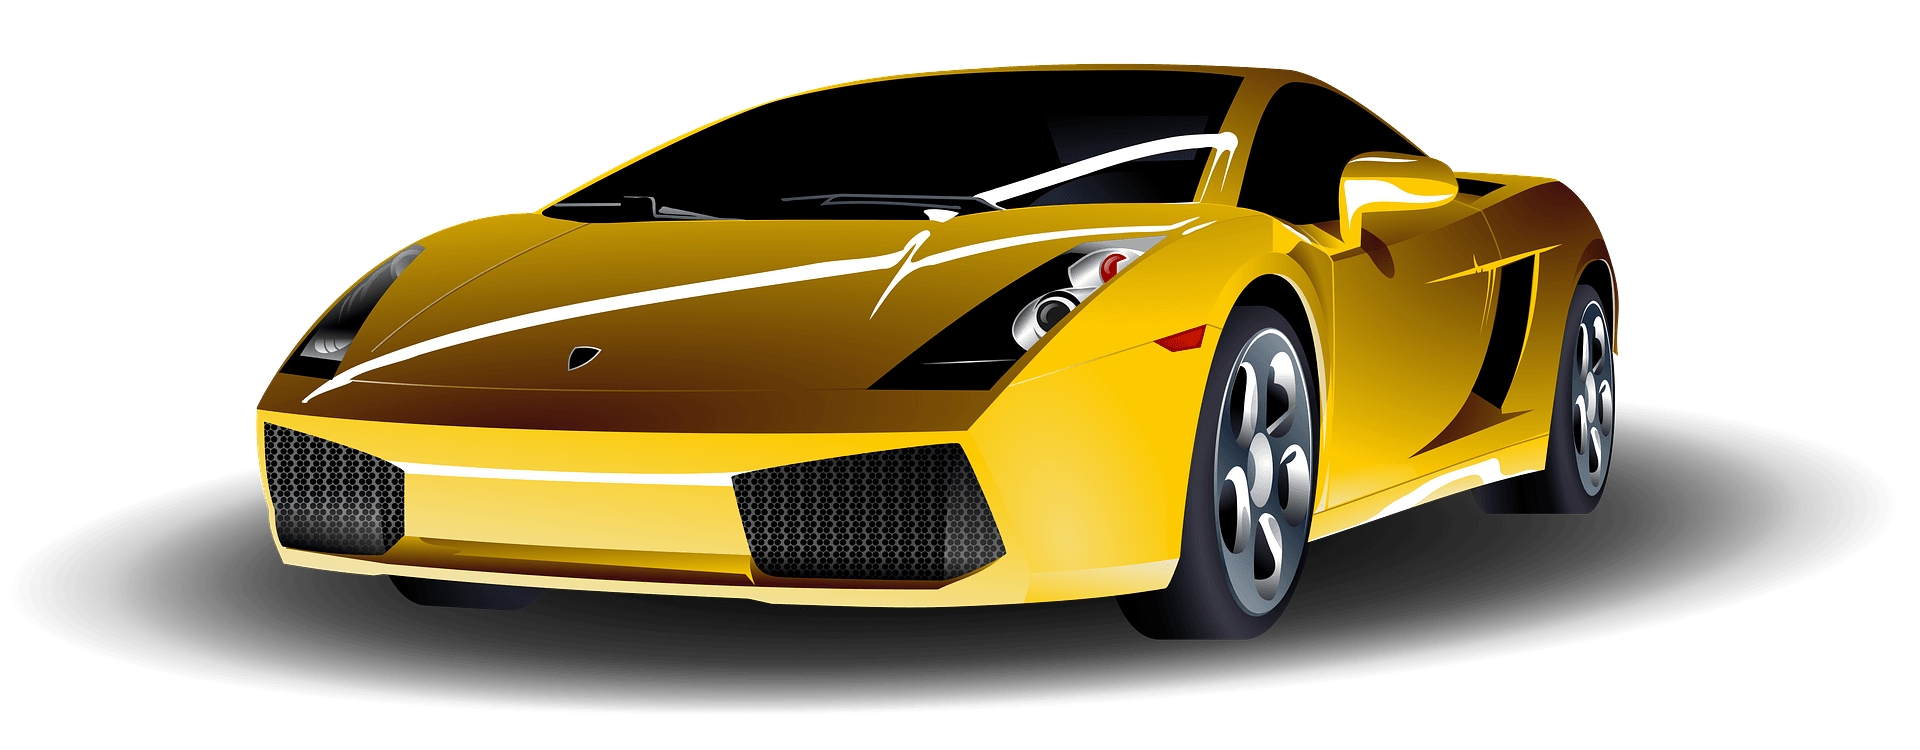 Convertible Lamborghini Pic Yellow HD Image Free PNG Image